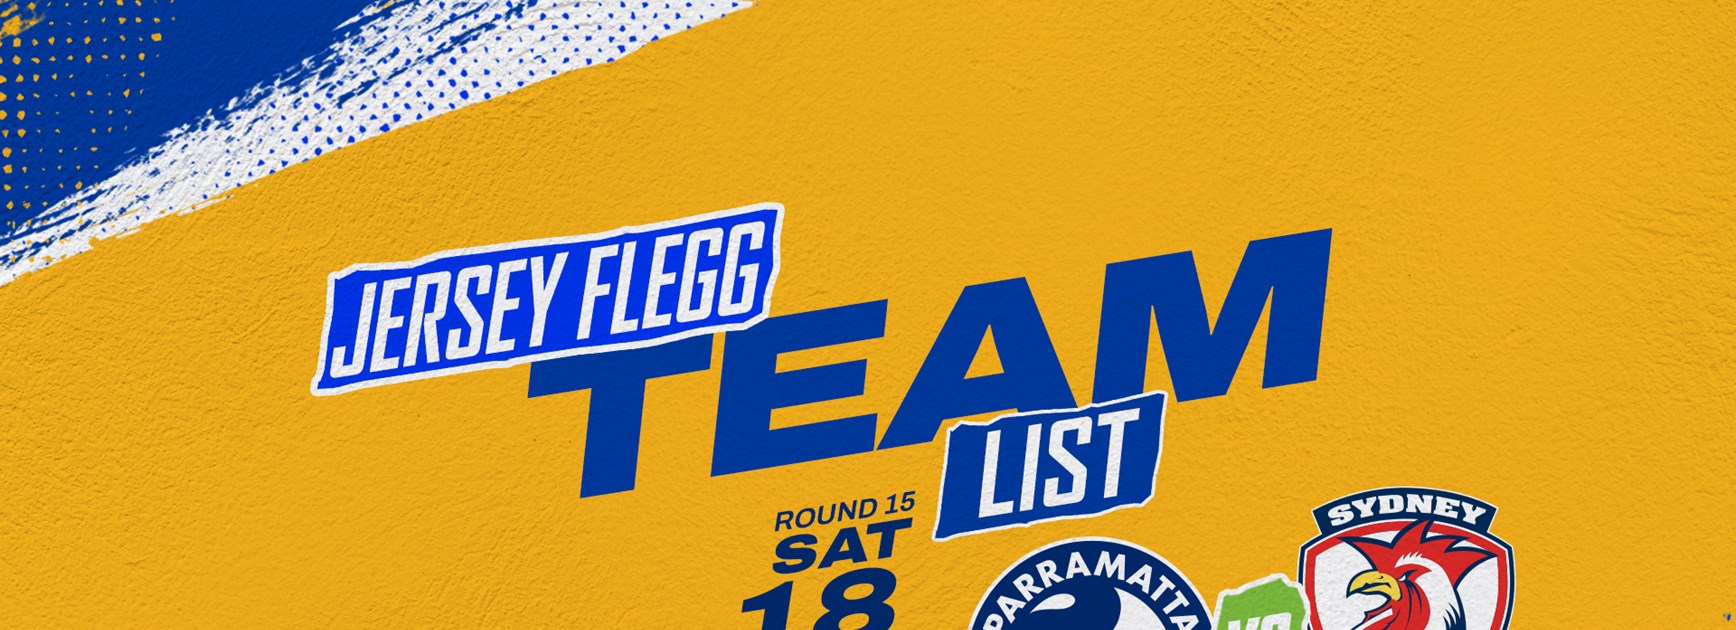 Jersey Flegg Cup Team List - Eels v Roosters, Round 15